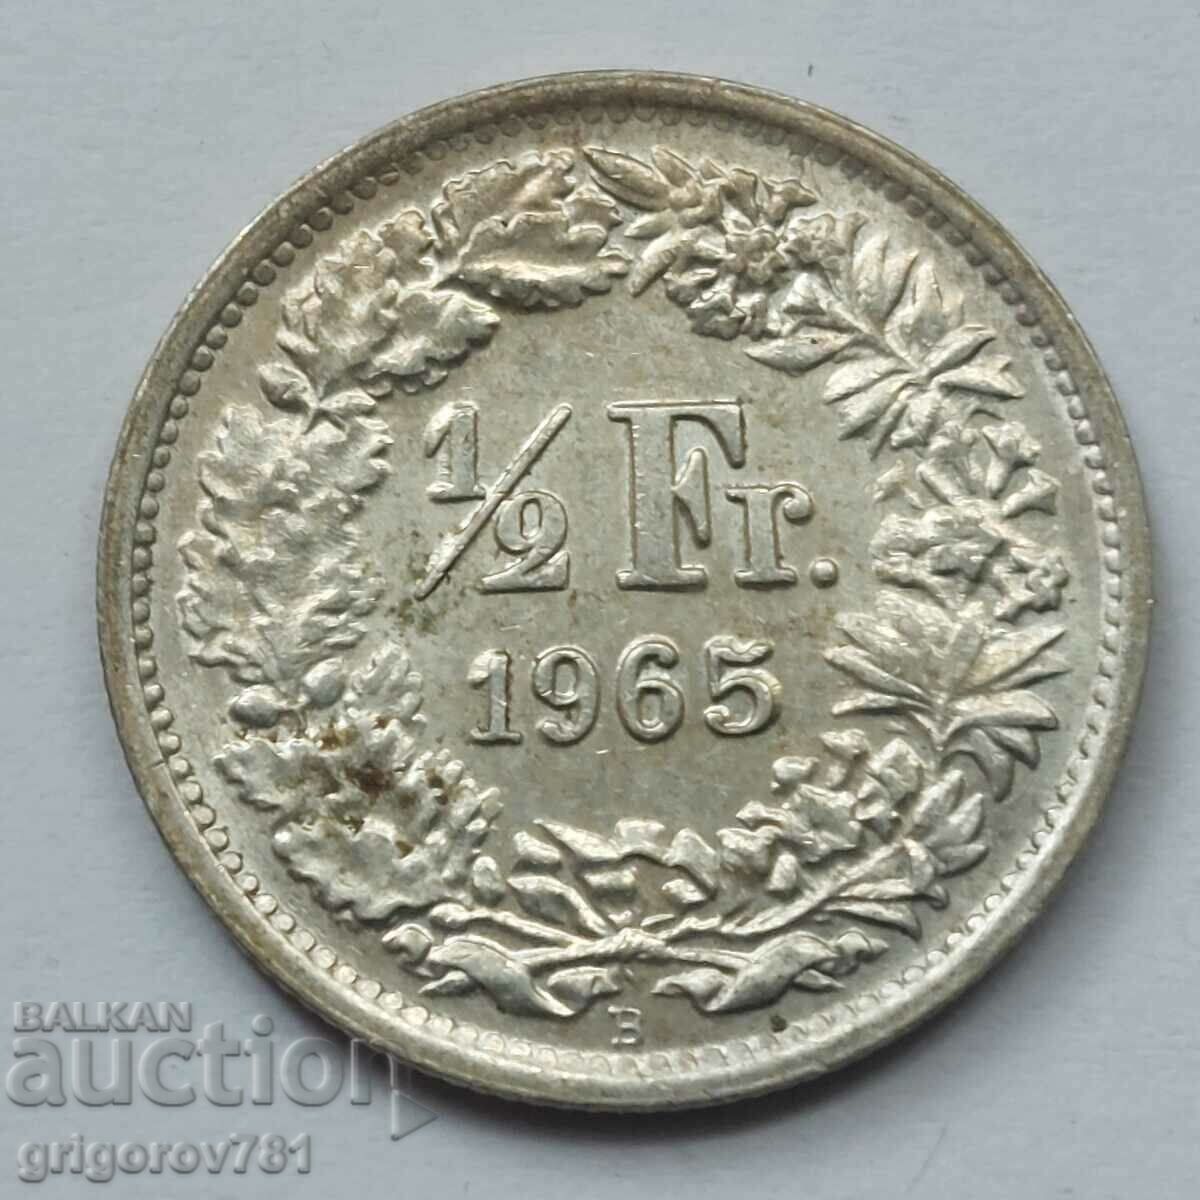 1/2 Franc Silver Switzerland 1965 B - Silver Coin #112